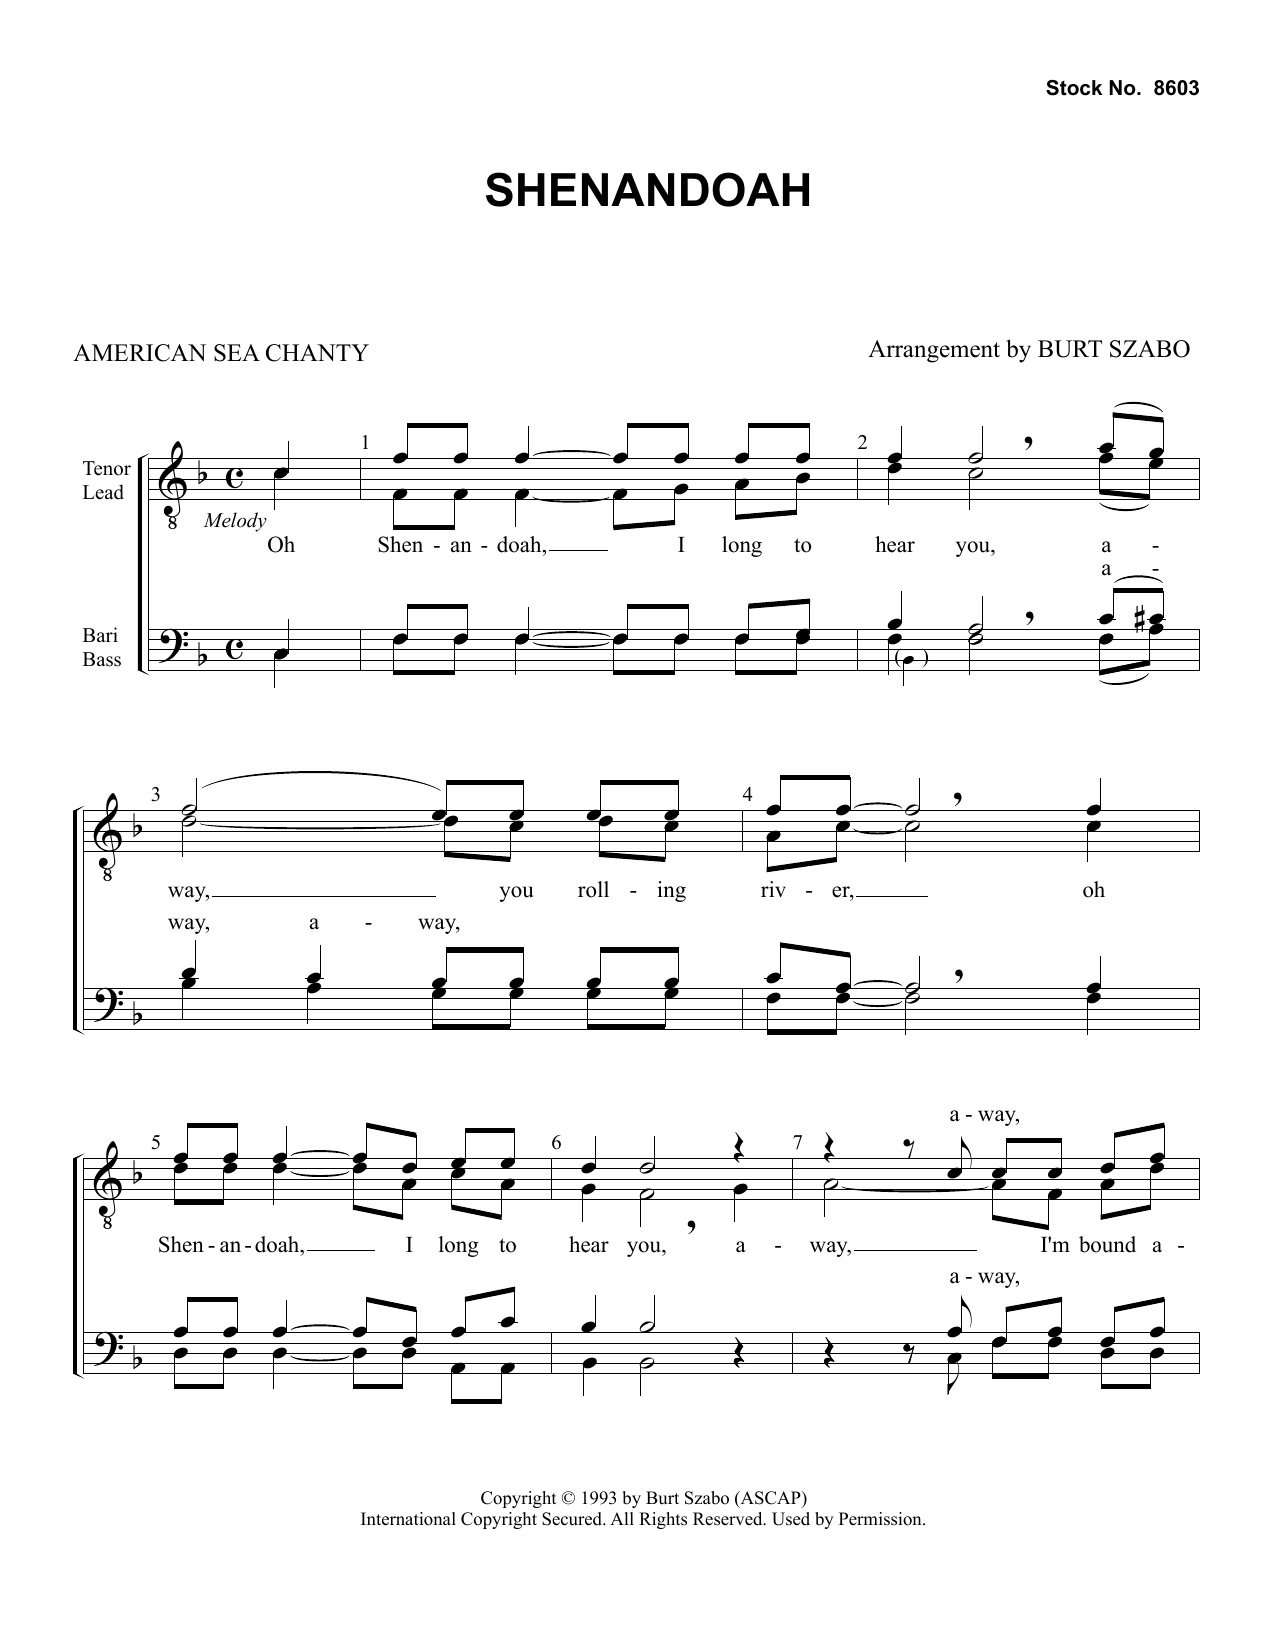 American Sea Chanty Shenandoah (arr. Burt Szabo) Sheet Music Notes & Chords for TTBB Choir - Download or Print PDF